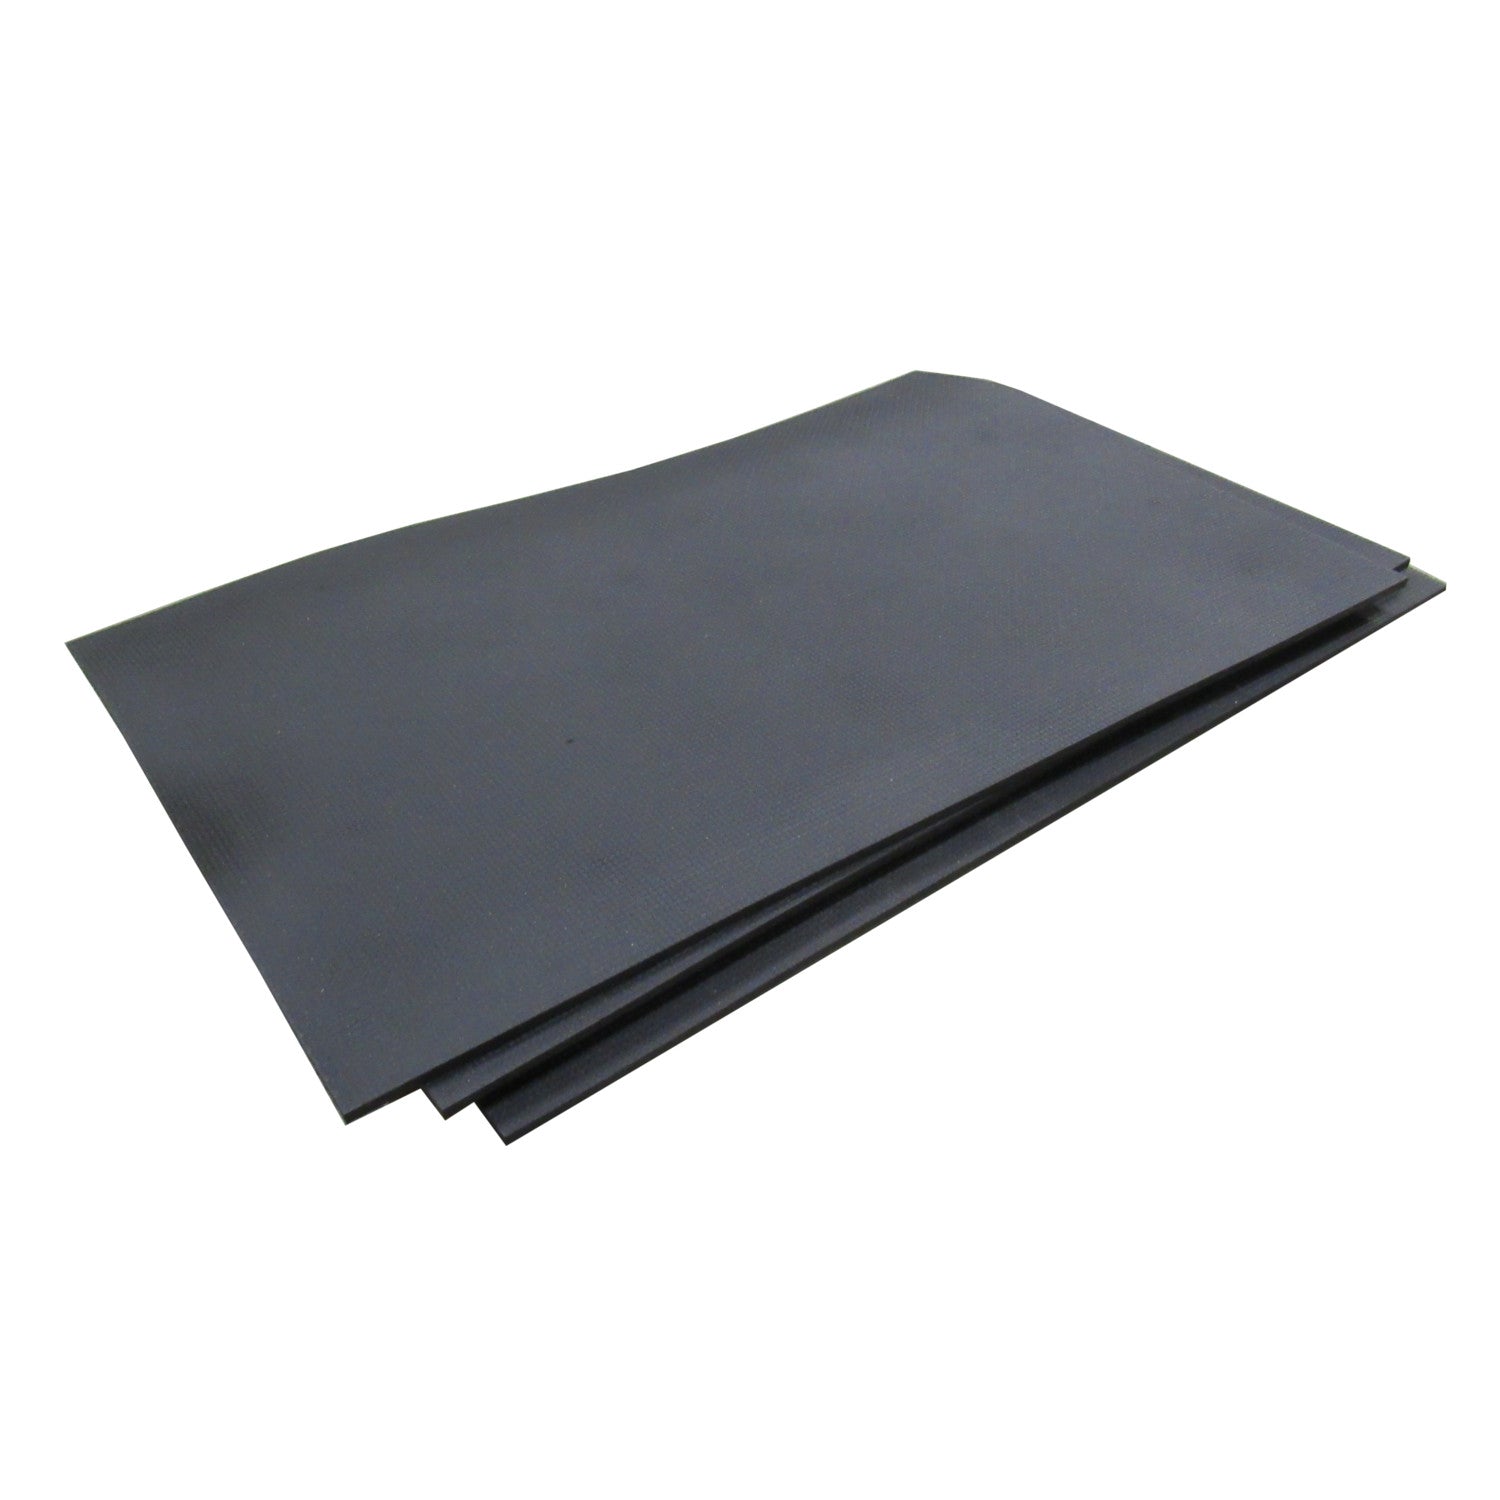 Silicone mat 60 x 100cm, black – Eriart OÜ